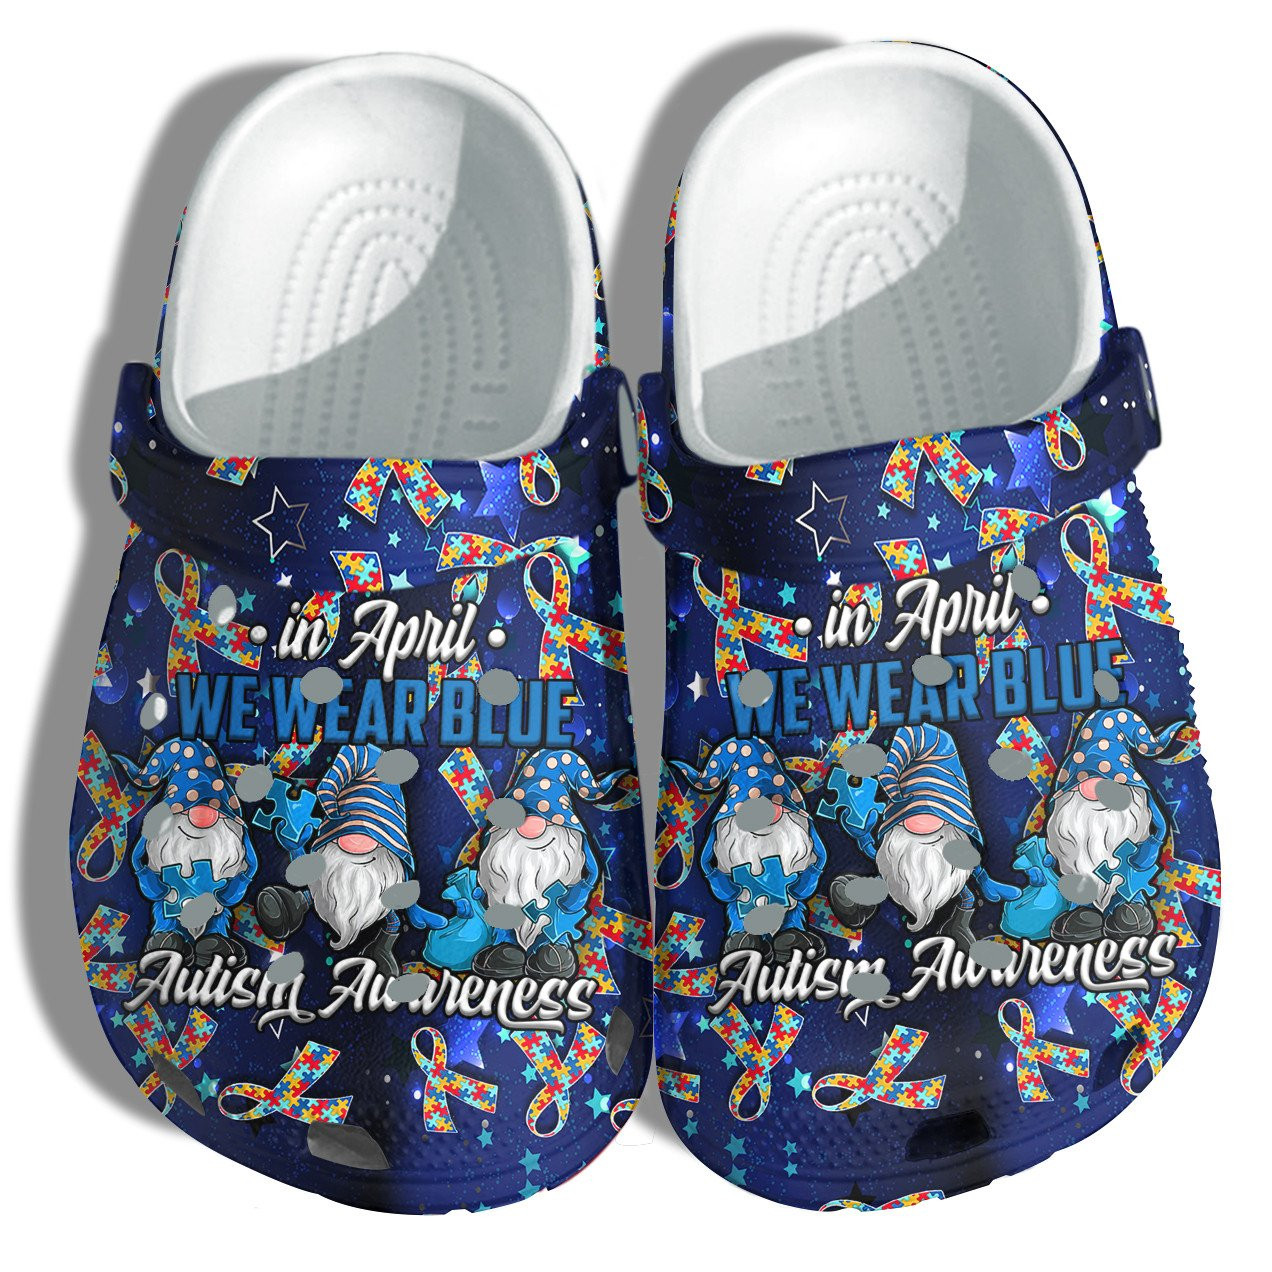 Crocs Shoes Gnomies In April We Wear Blue Autism Shoes Croc Clogs Gifts For Son Daughter